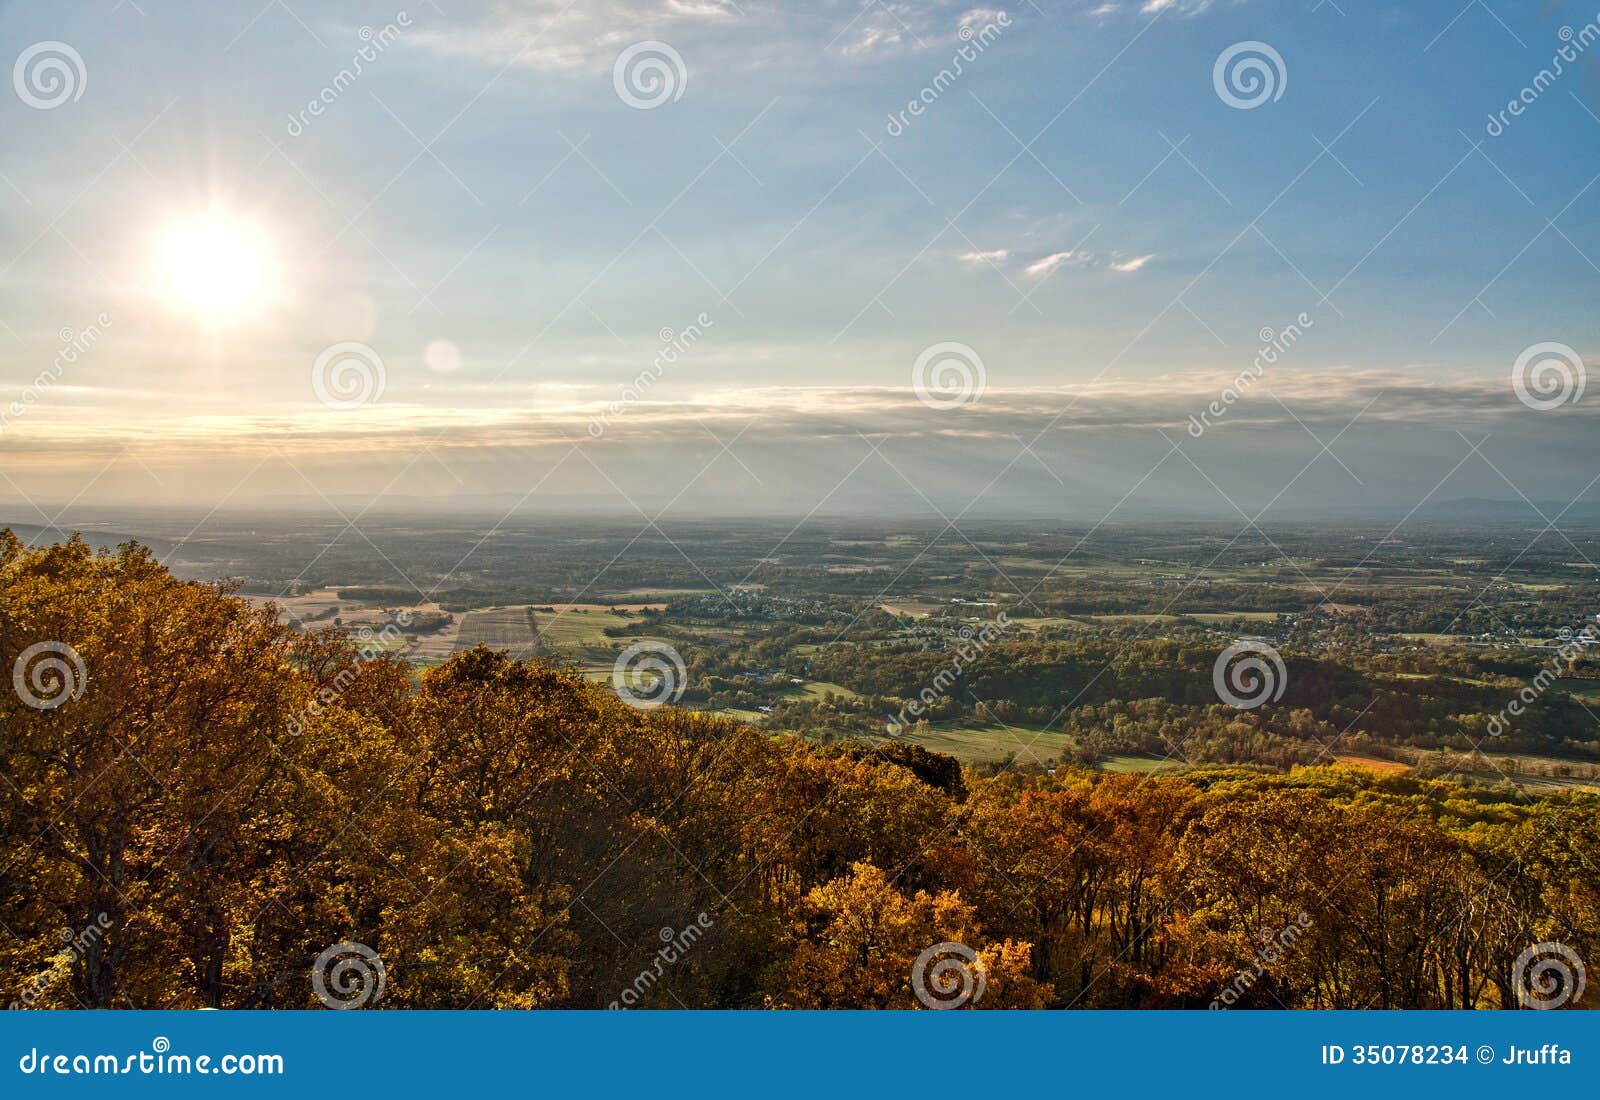 western maryland countryside panorama